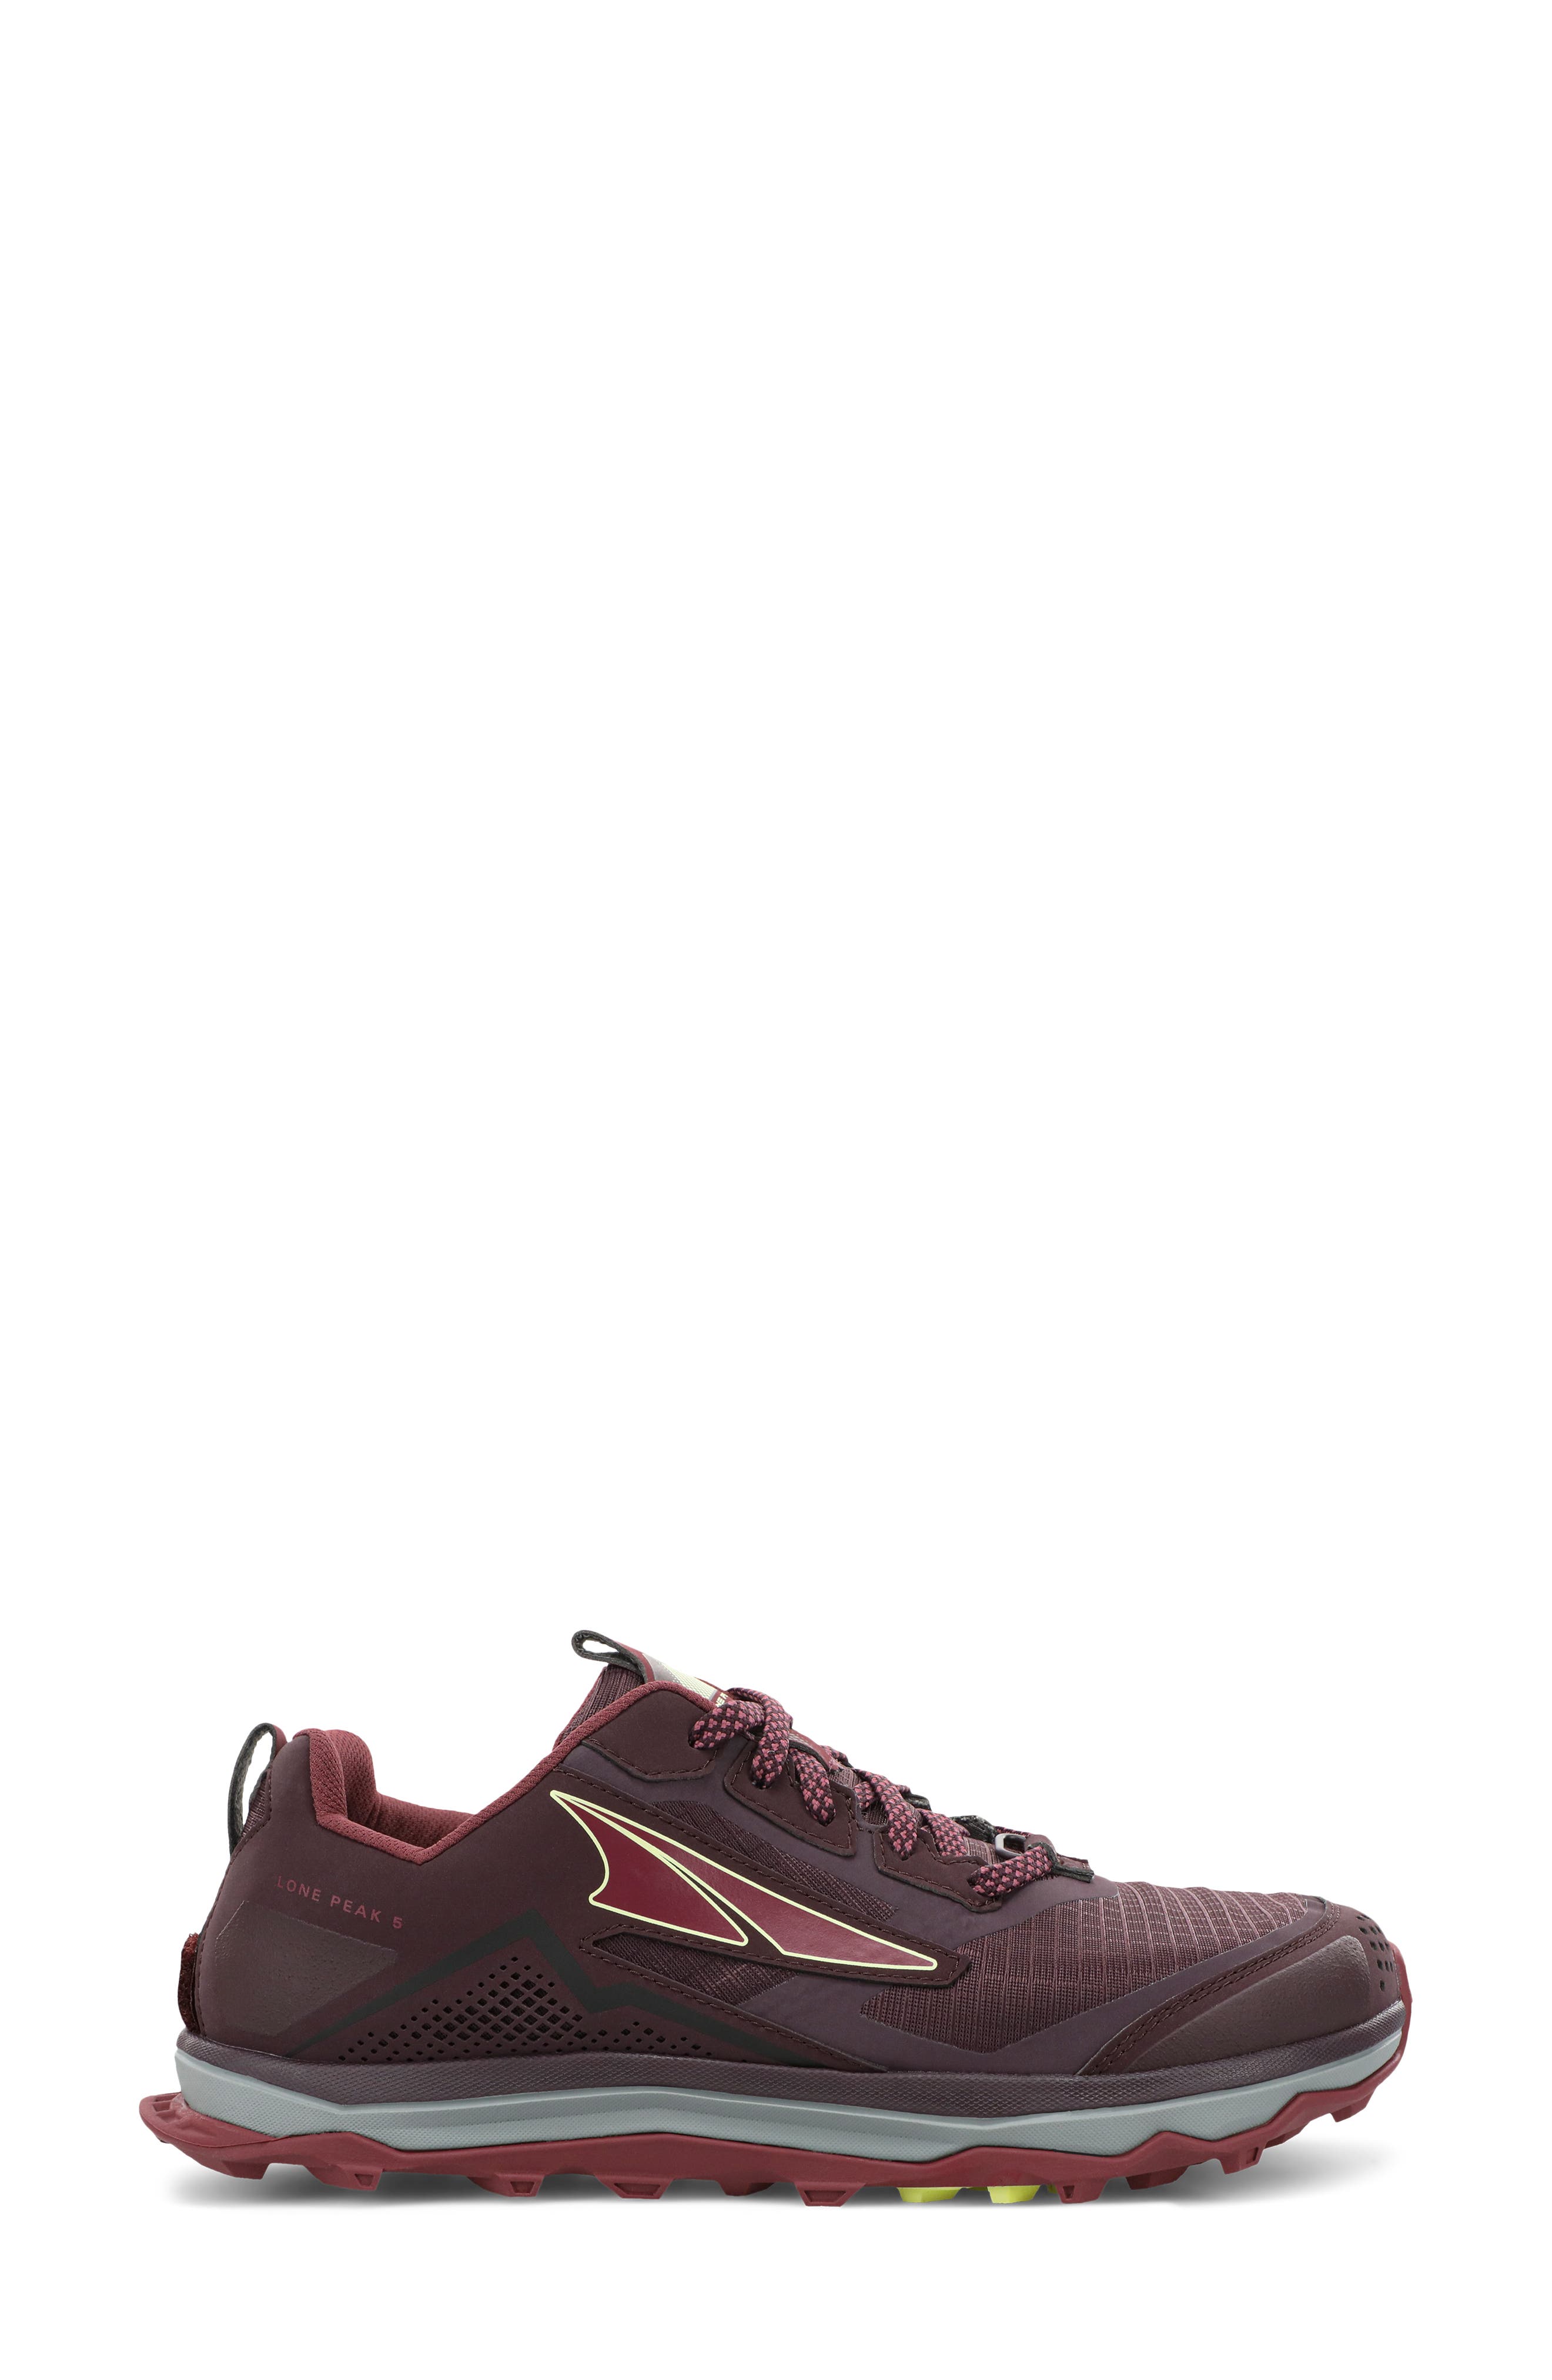 burgundy tennis shoes